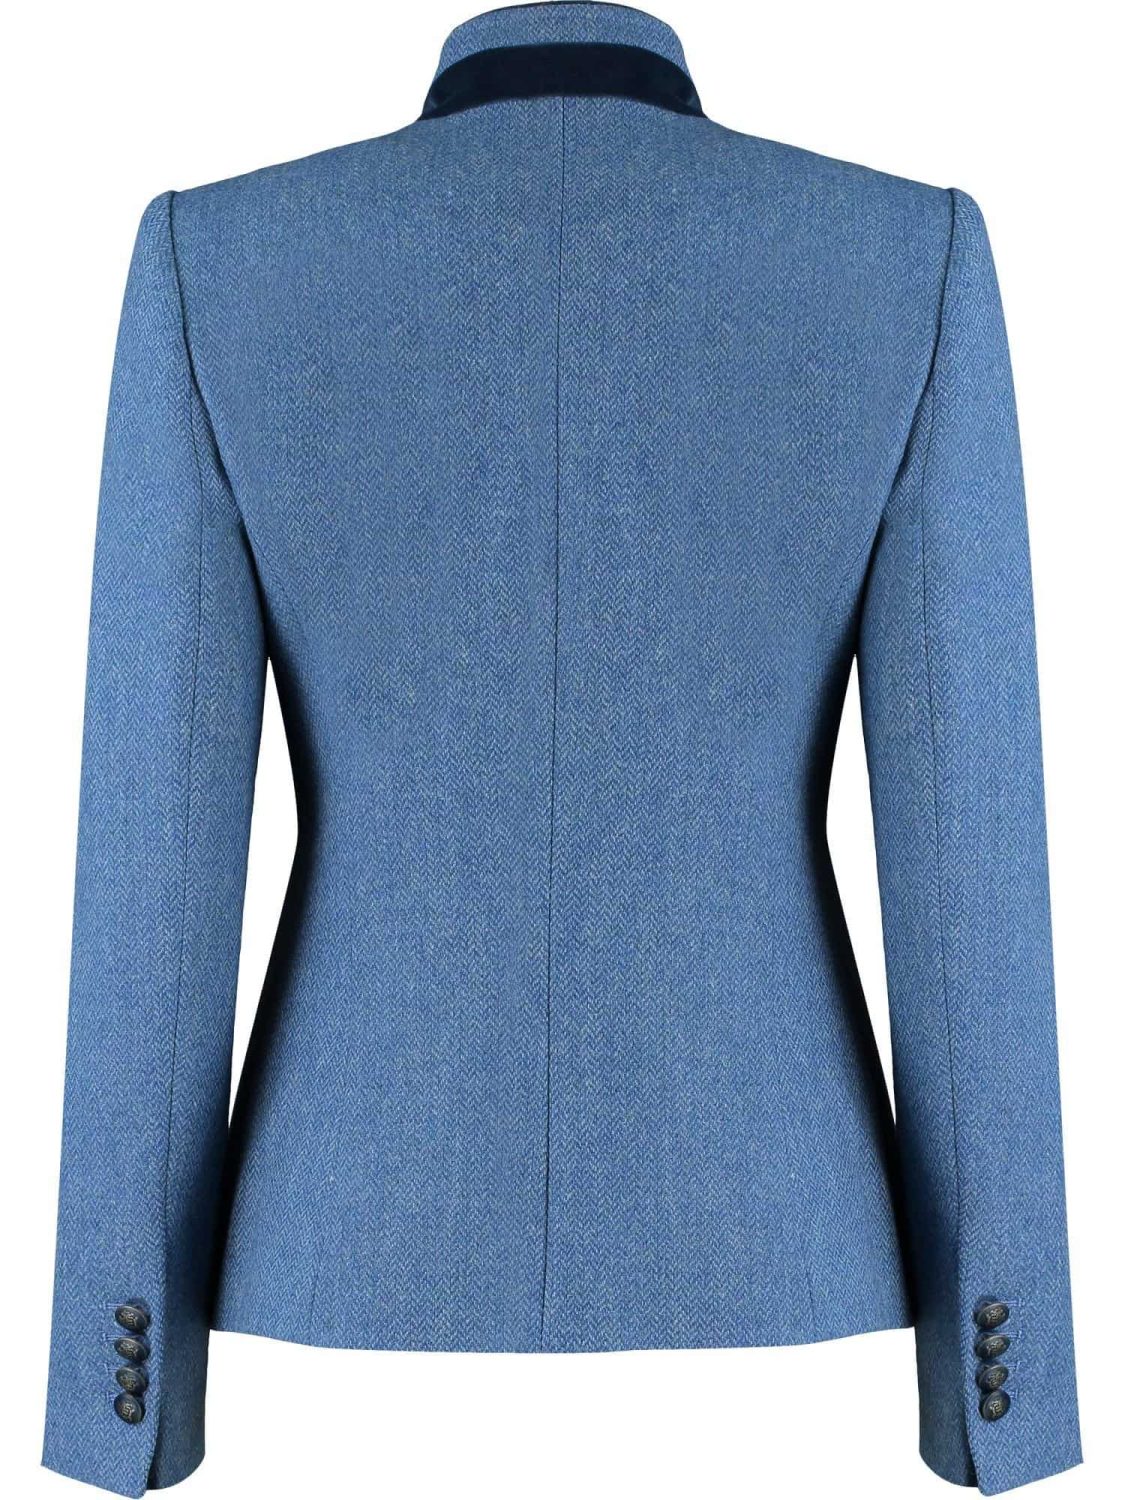 Amora Blue Tweed Jacket mb (5)